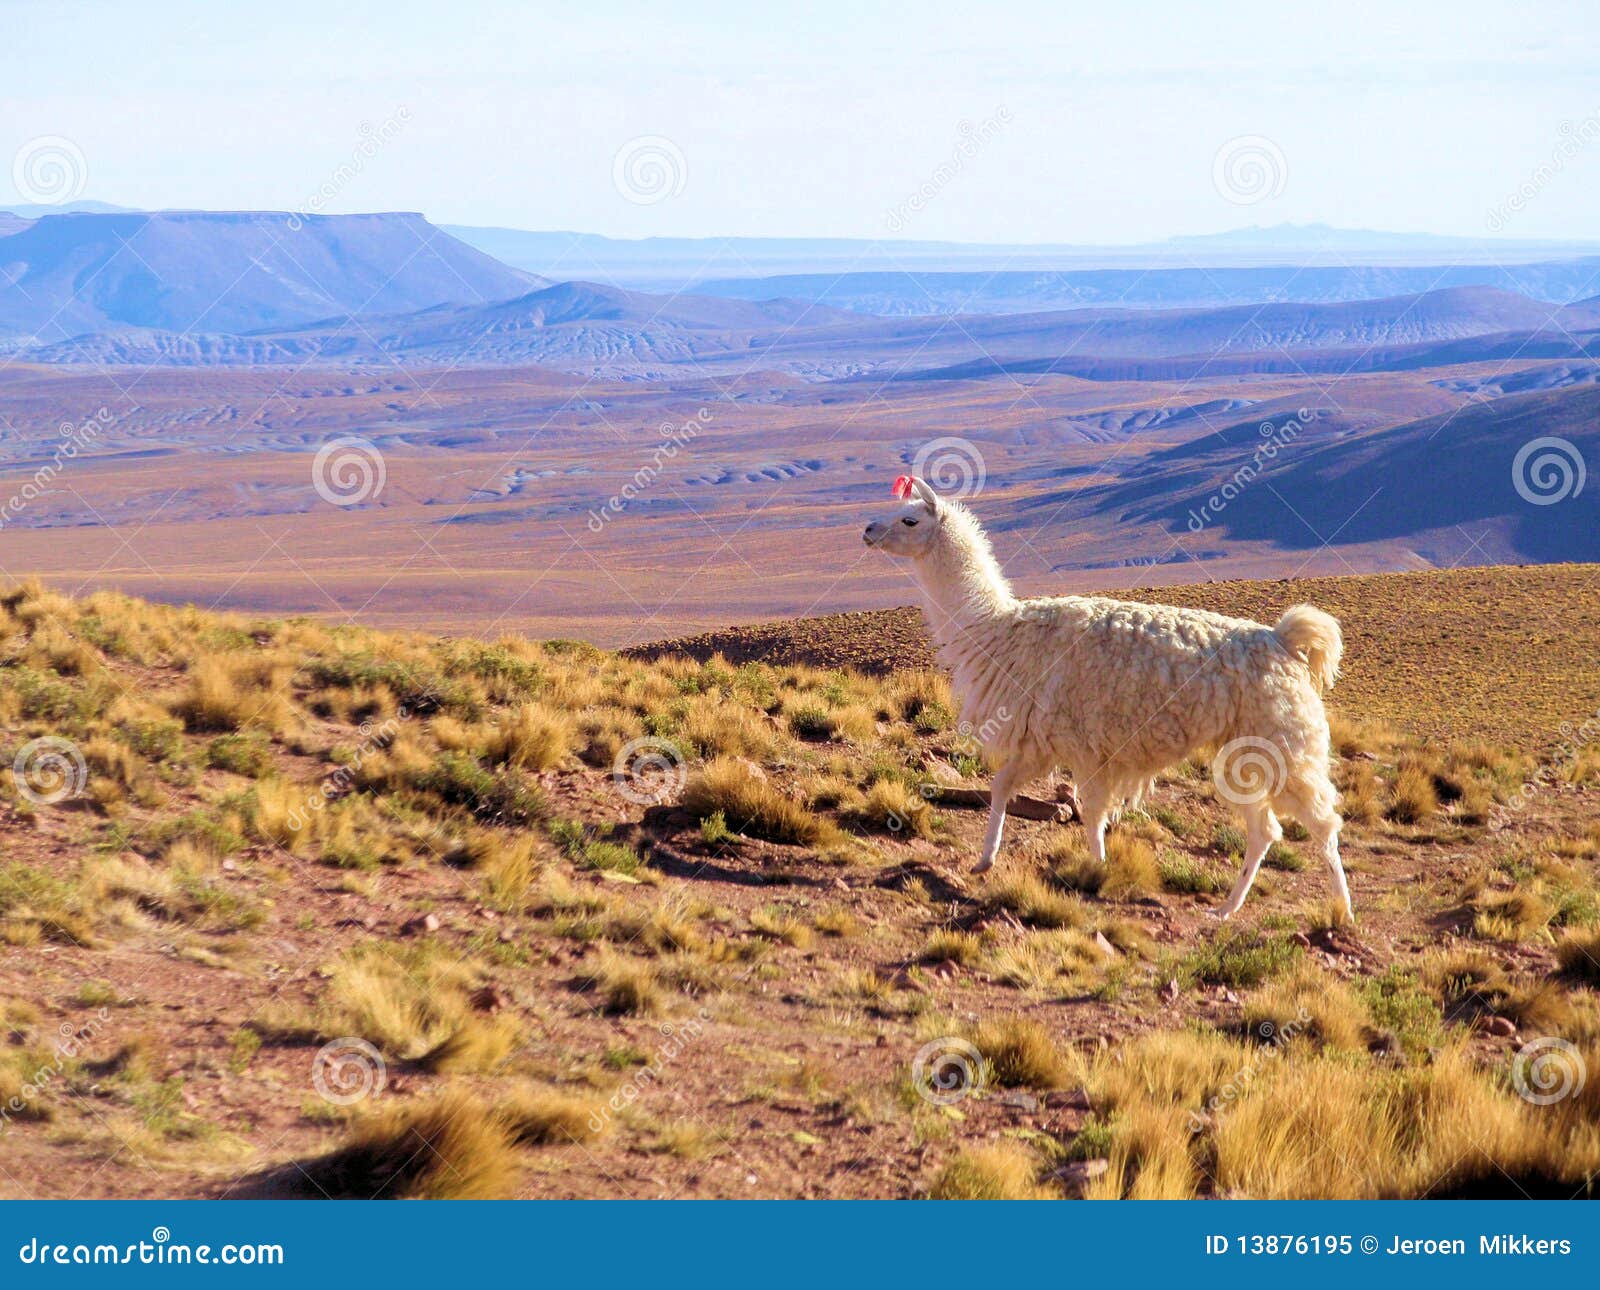 lama on the altiplano